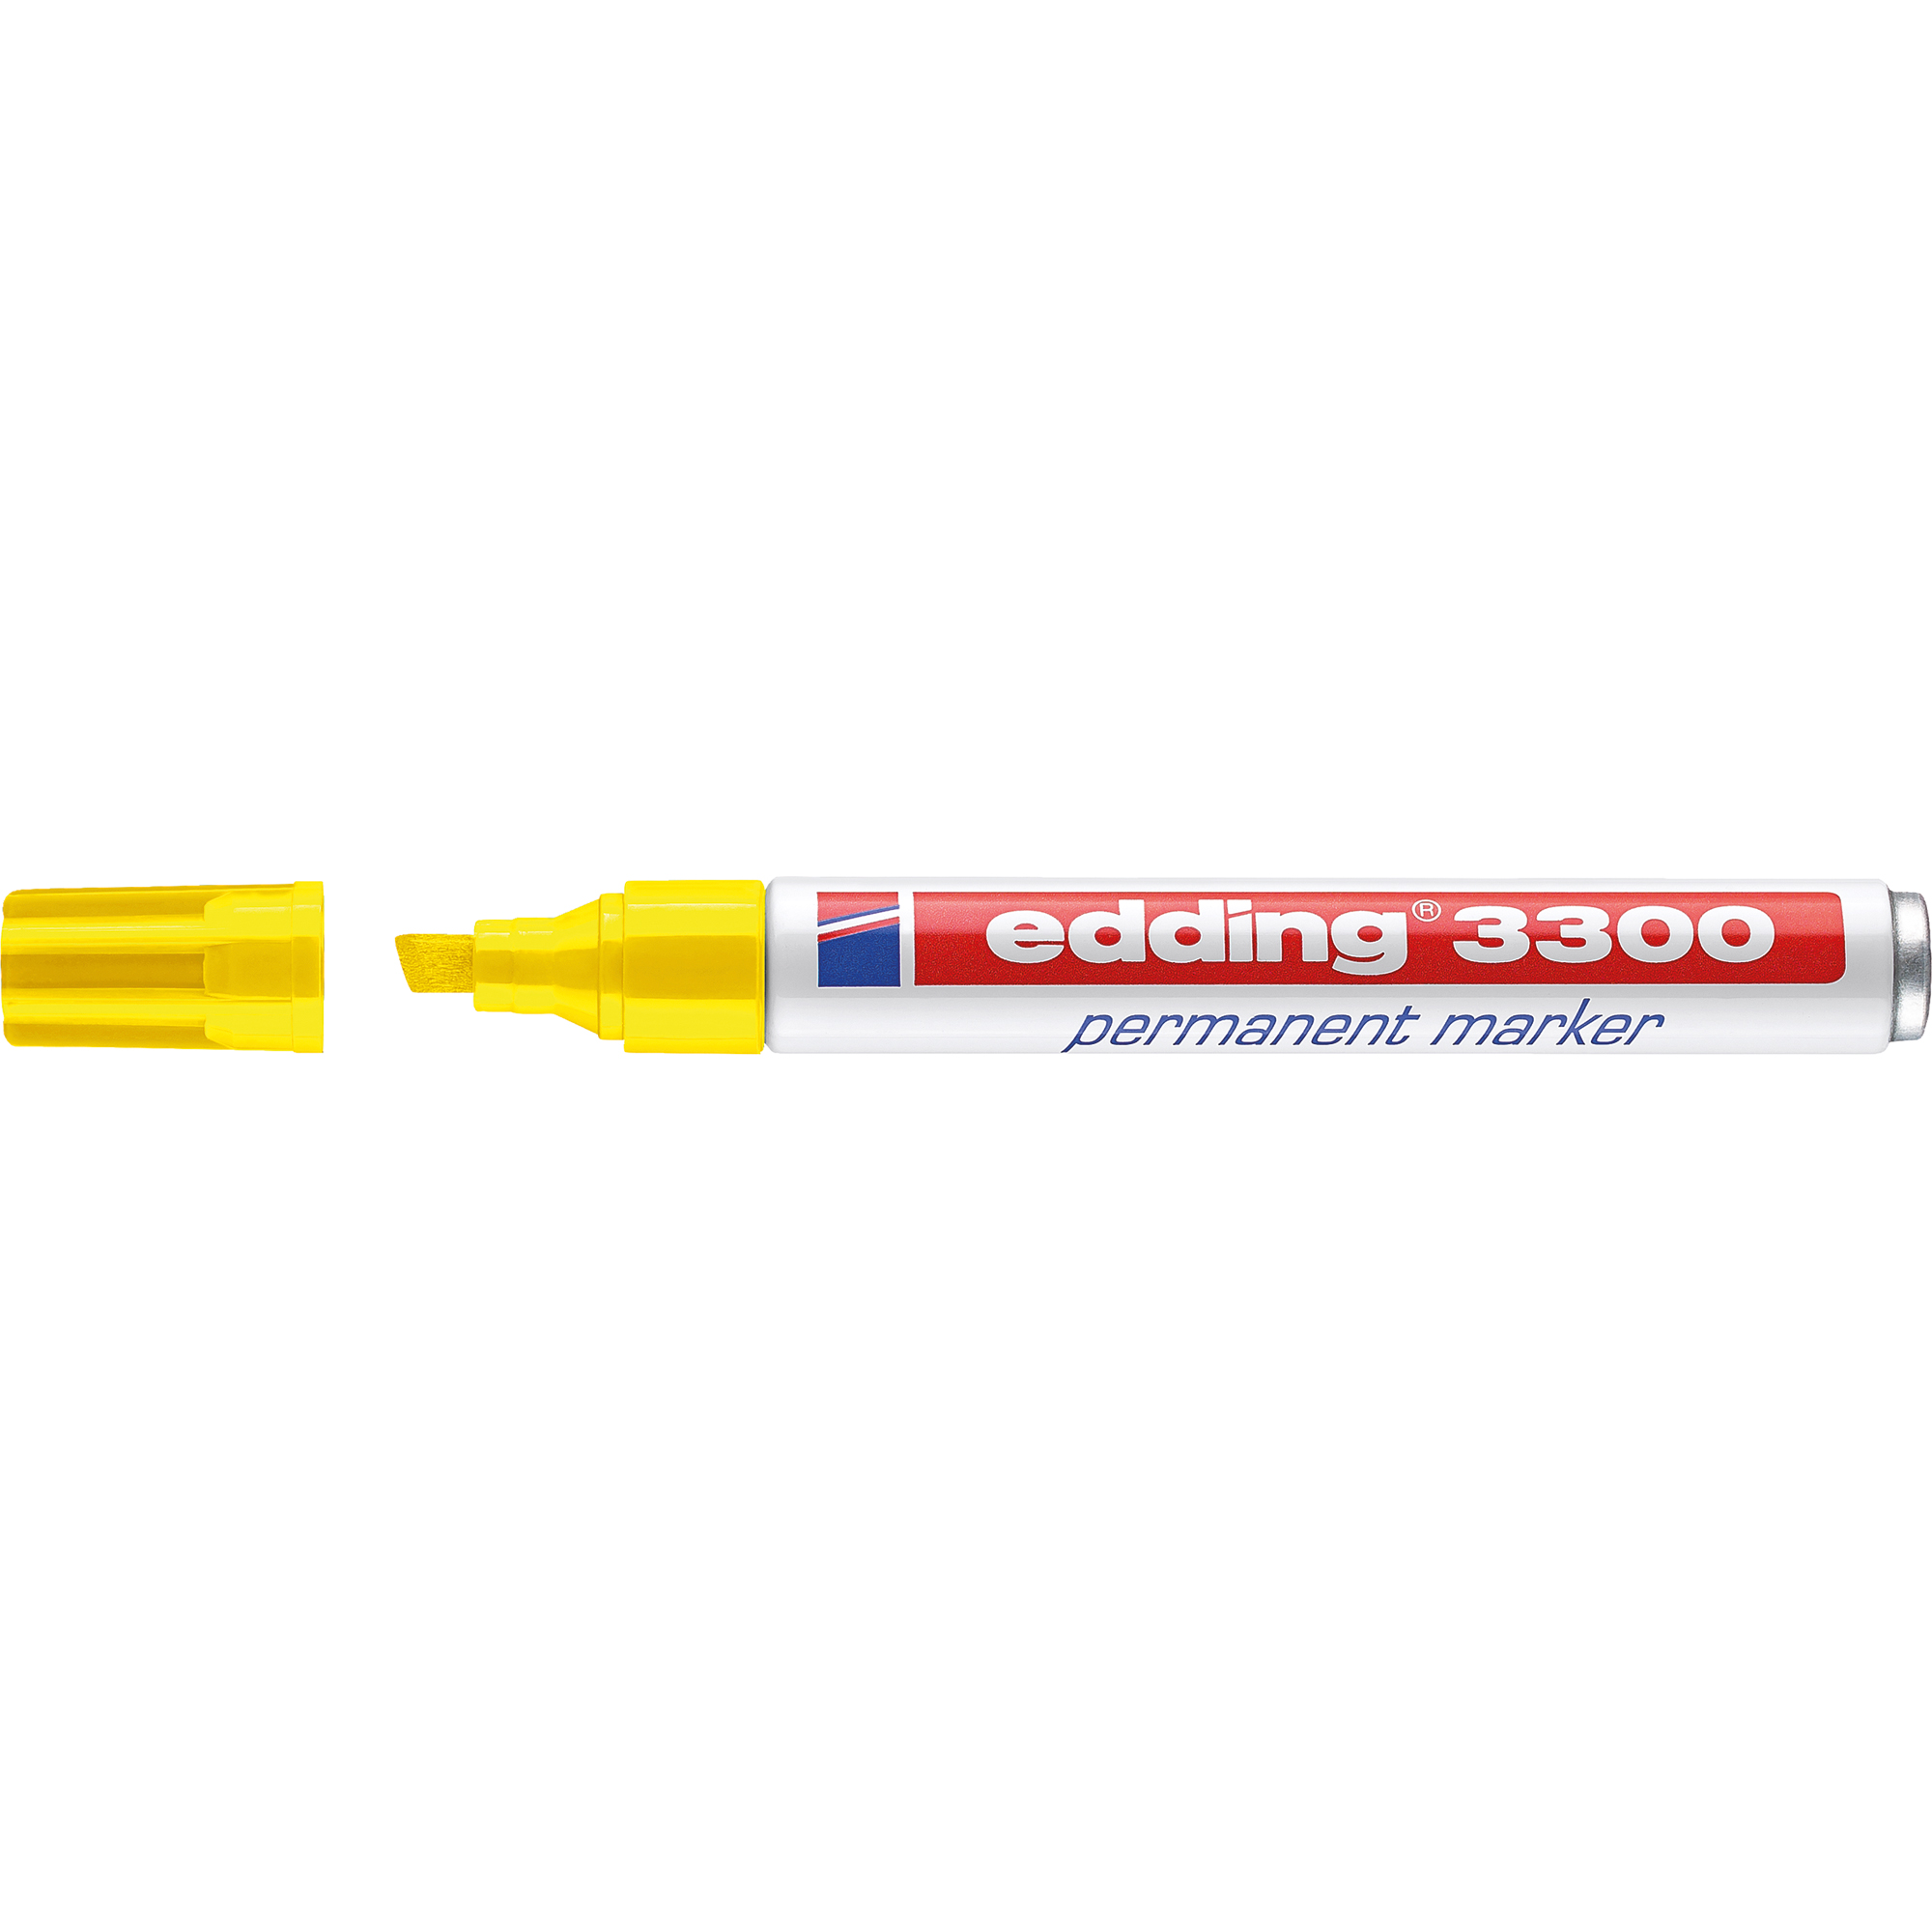 edding Permanentmarker 3300 gelb